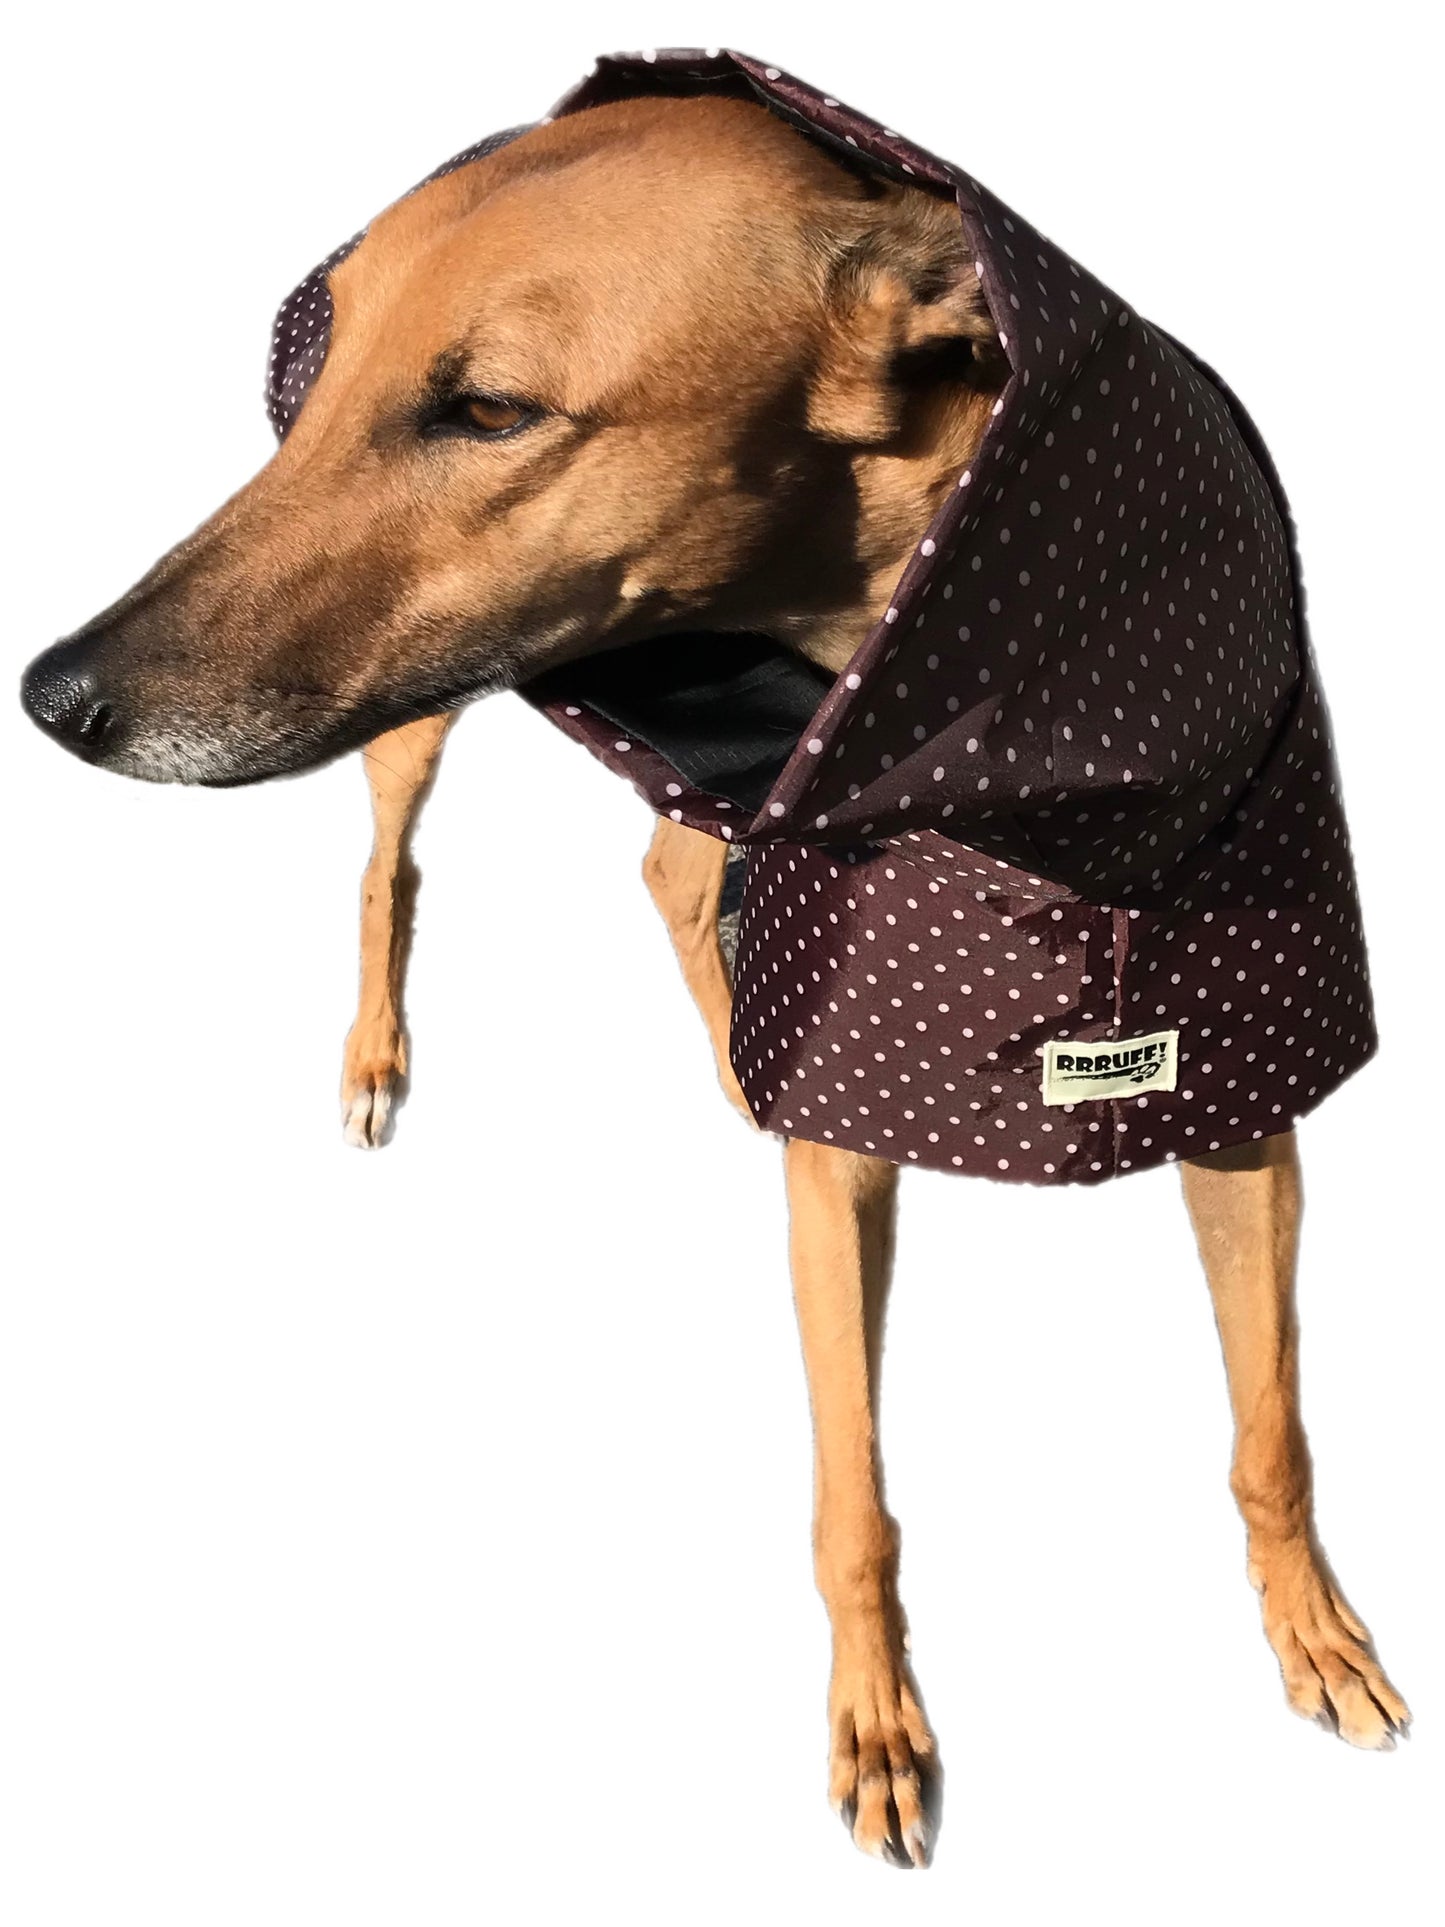 Latte dotty prints Greyhound coat deluxe style, summer rainwear, washable